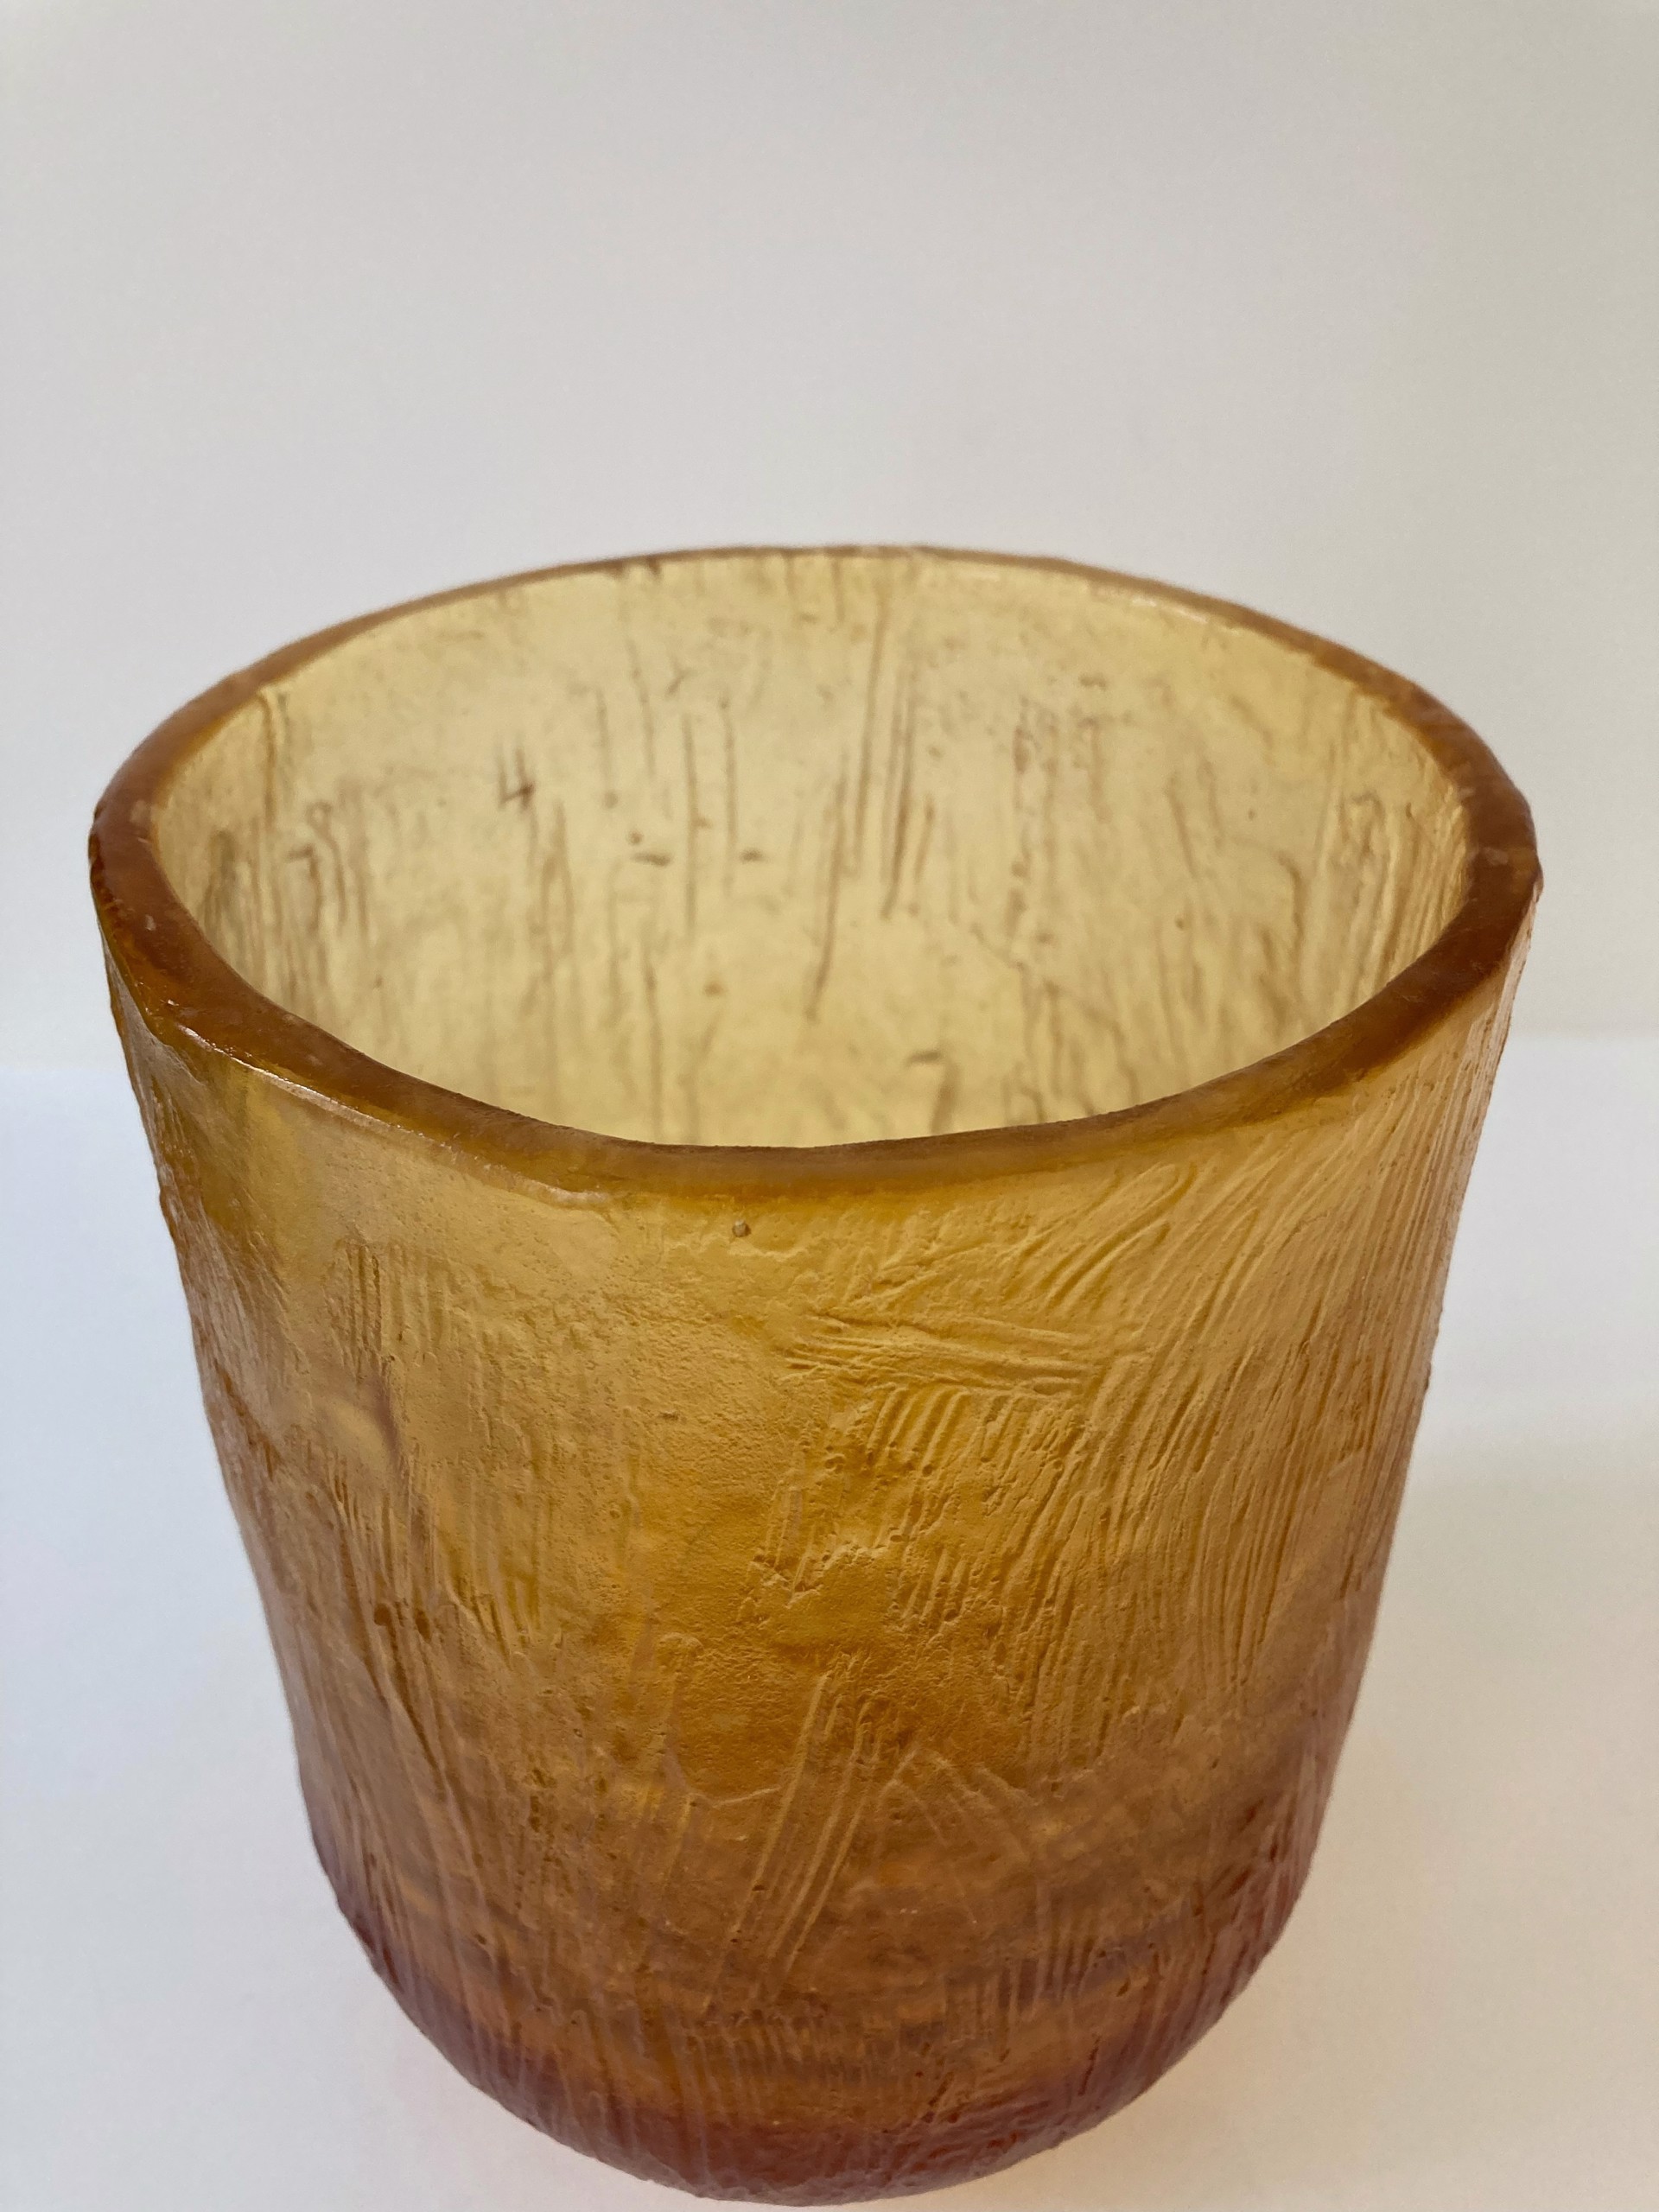 Amber hurricane or vase by Feleksan Onar